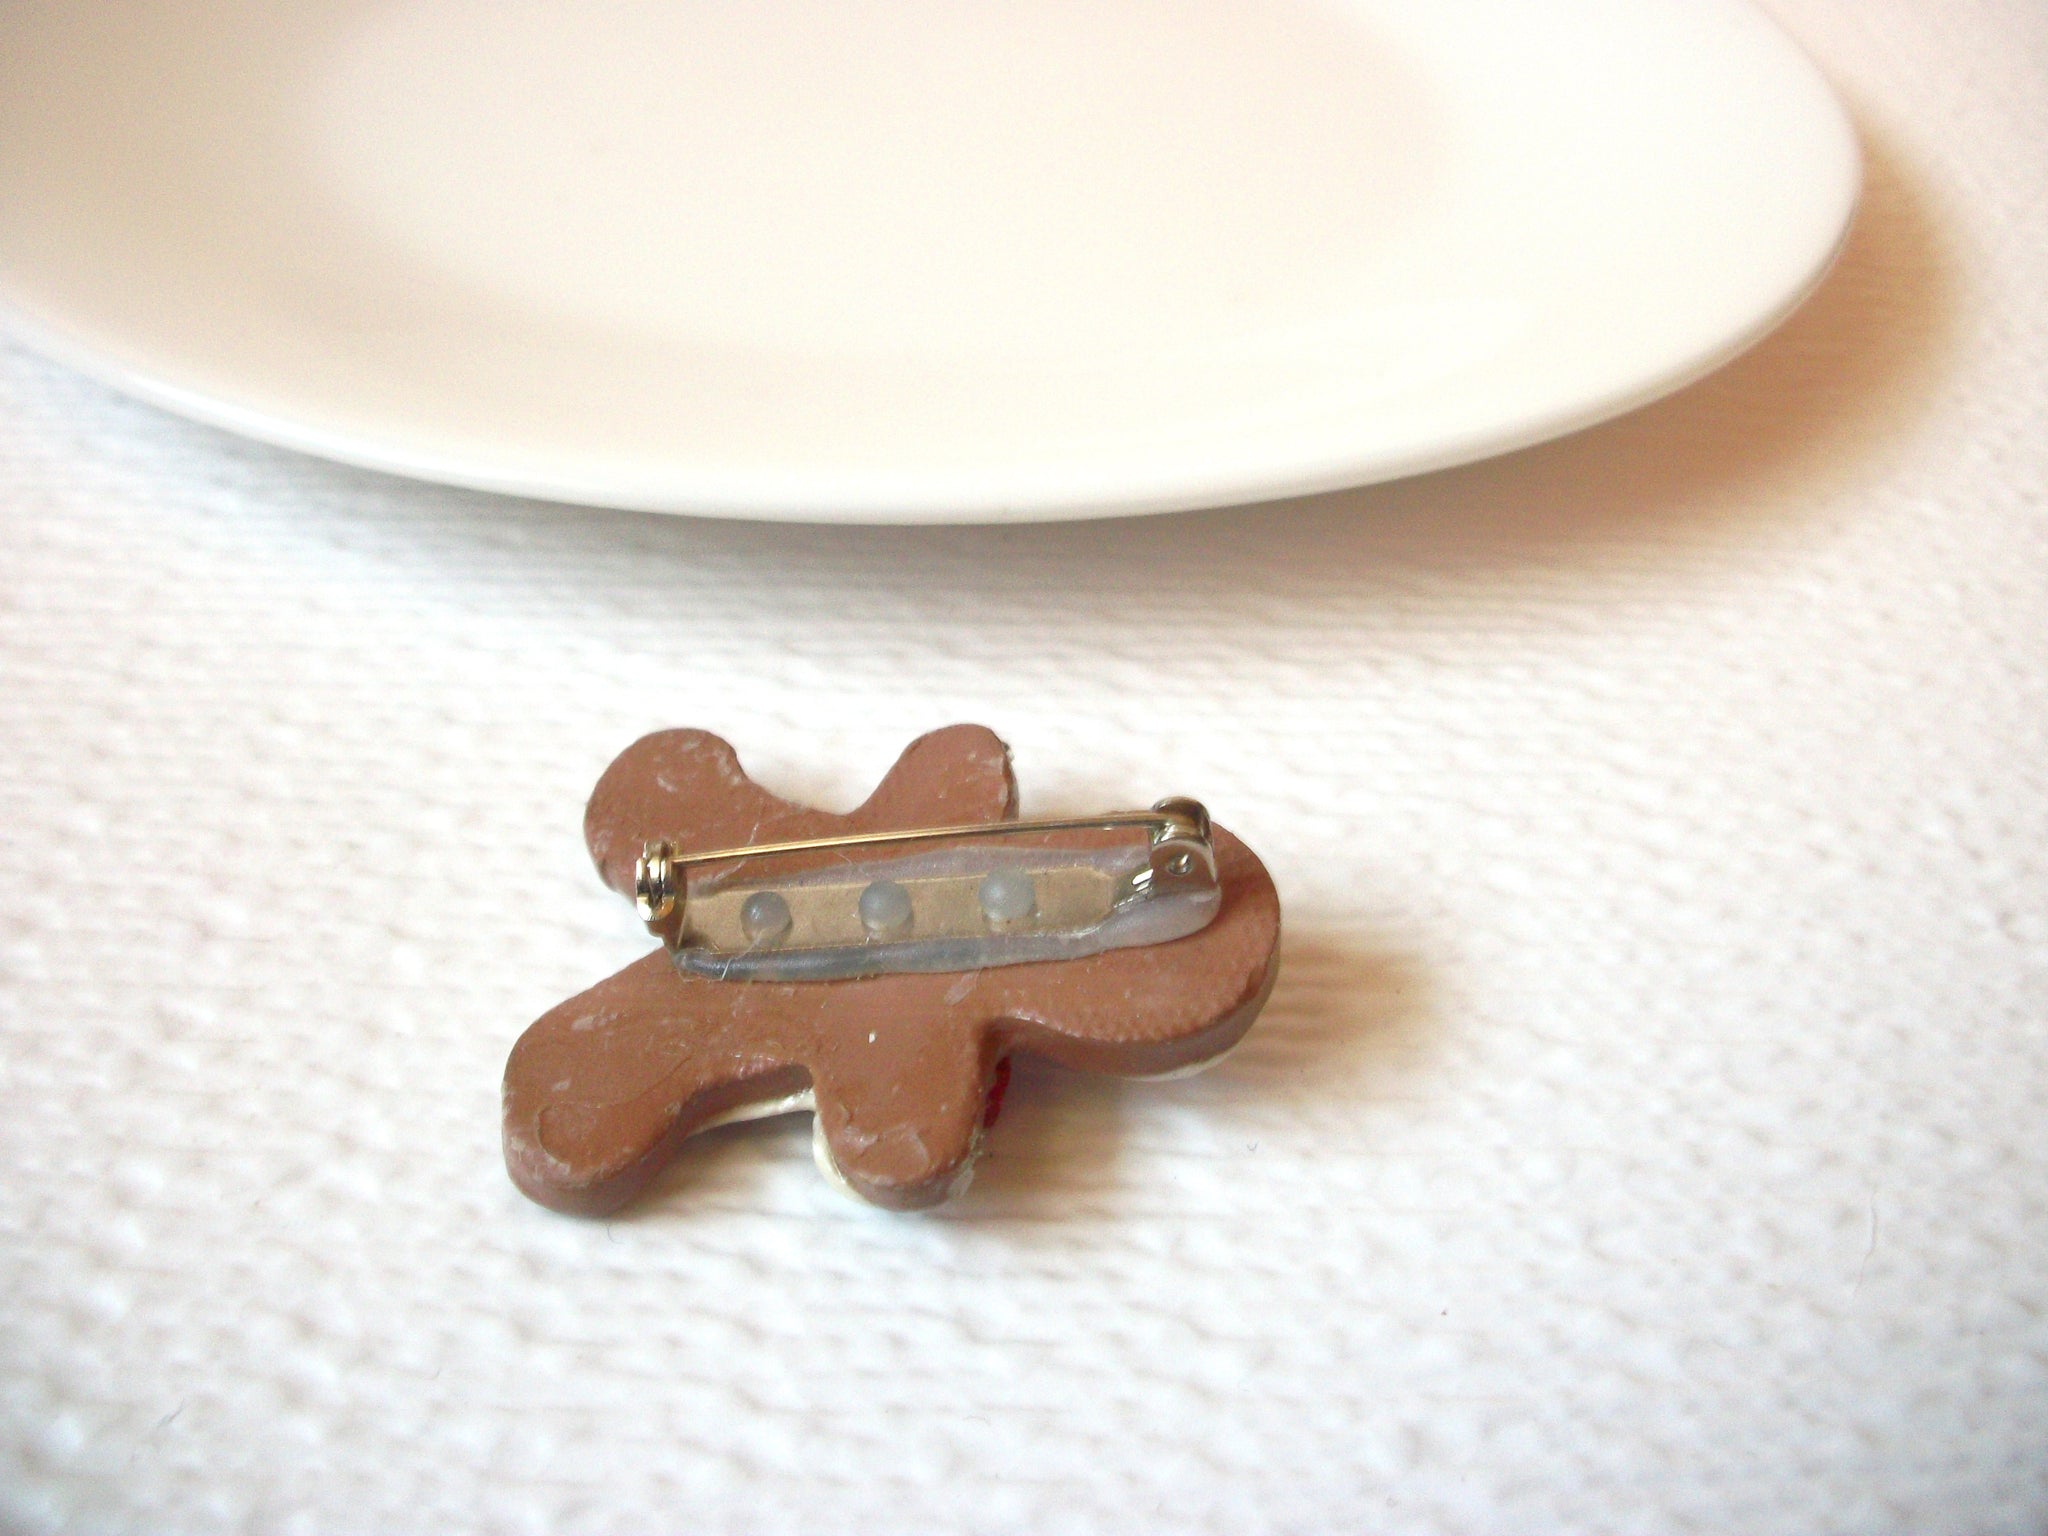 Vintage Gingerbread Man Brooch Pin 102120